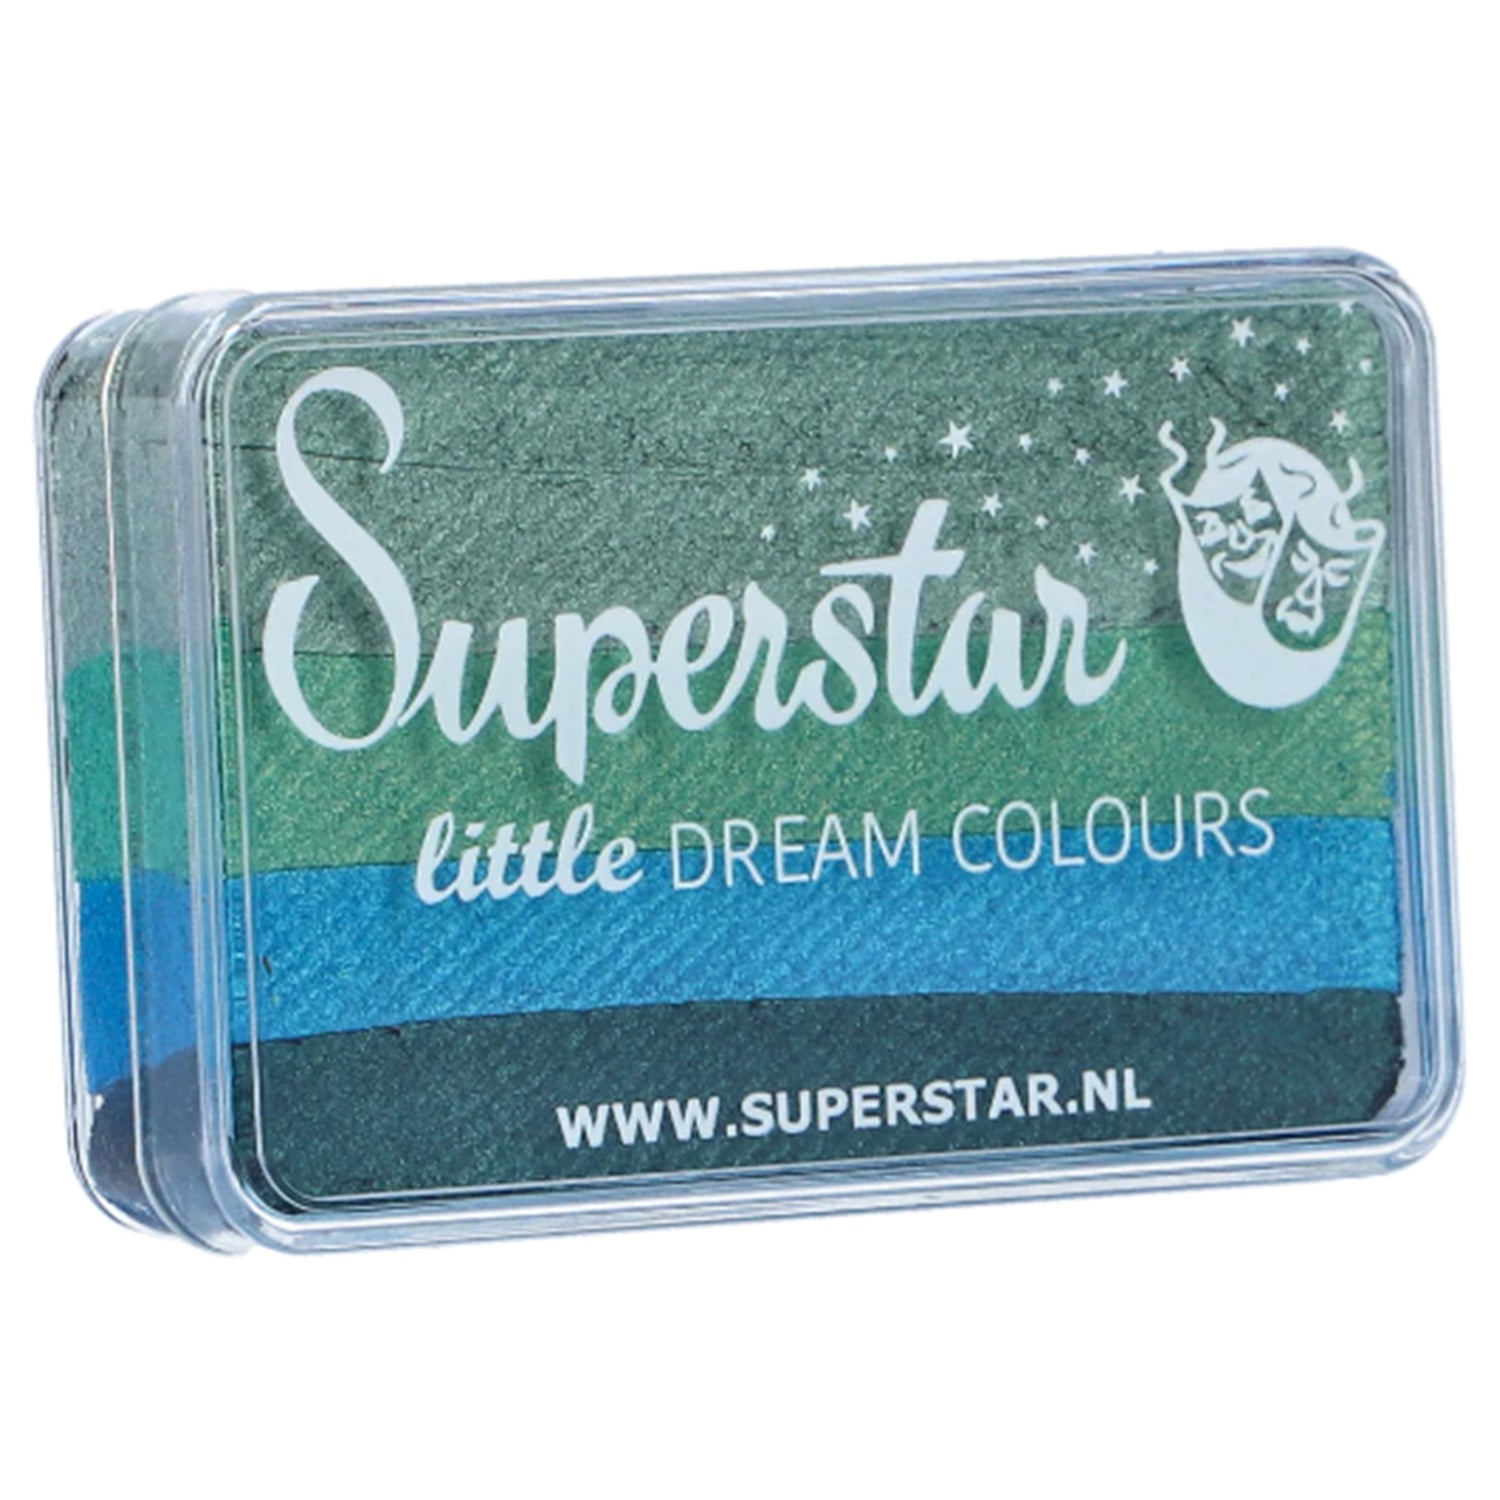 Superstar Dream Colours Rainbow Cake - Little Ocean (1.06 oz/30 gm)